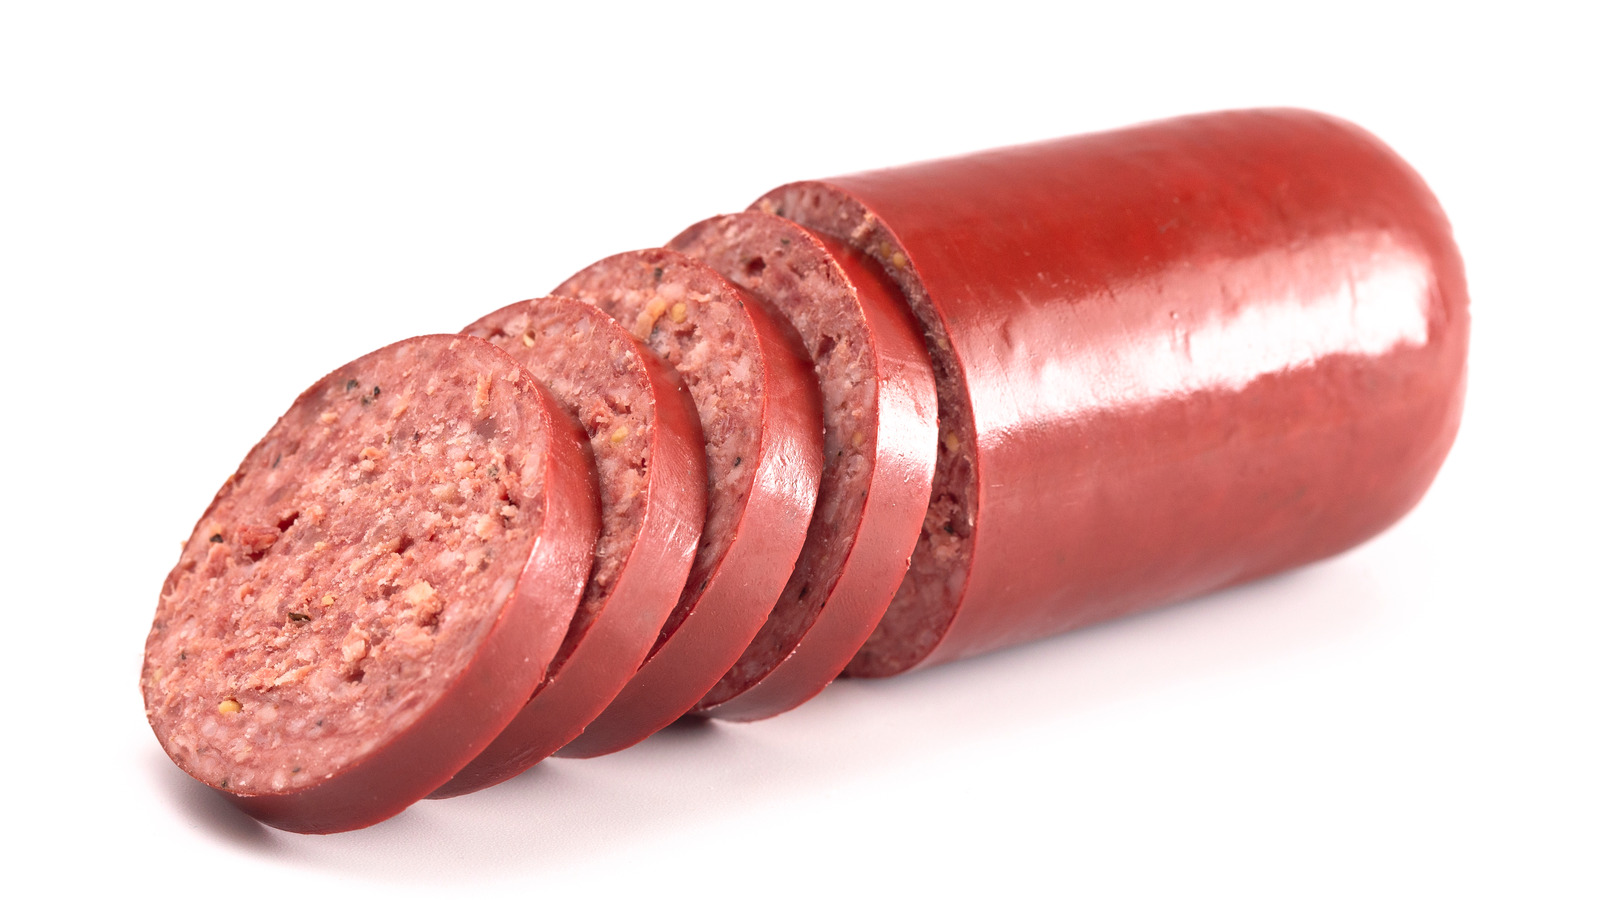 Lebanon Bologna The Smoky Sausage You Should Know About